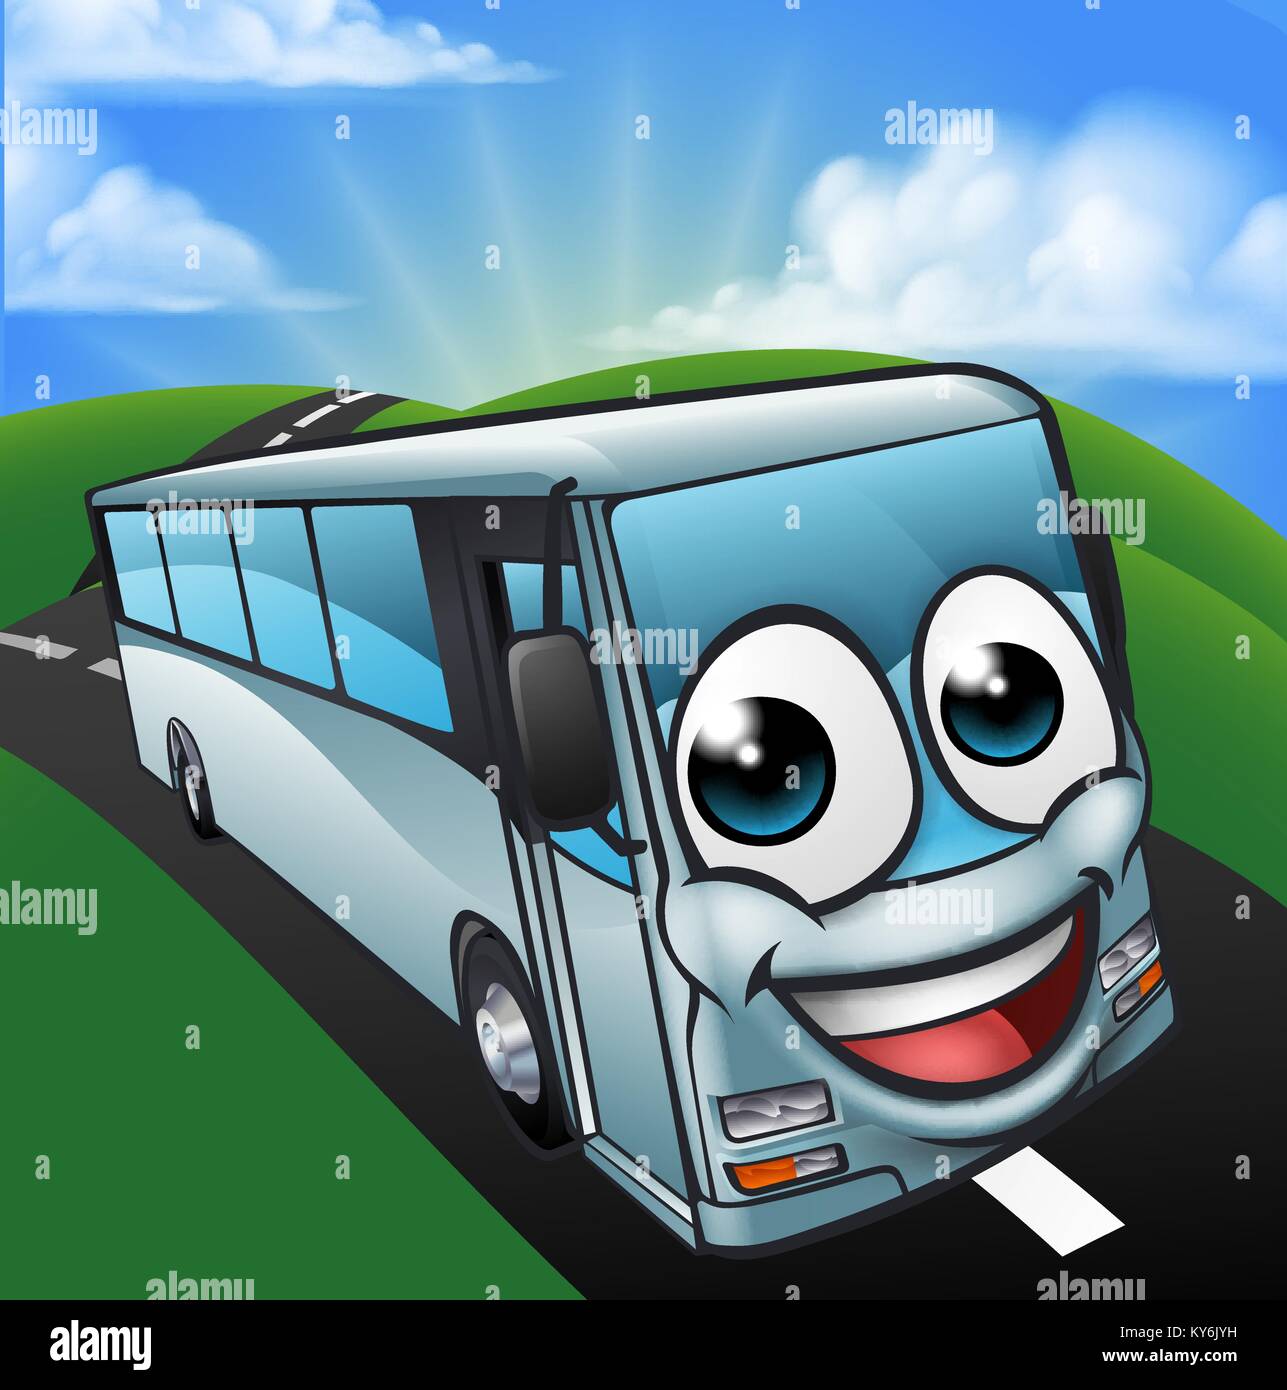 Coach Bus Cartoon Character Mascot Scene Stock Vector Image & Art - Alamy